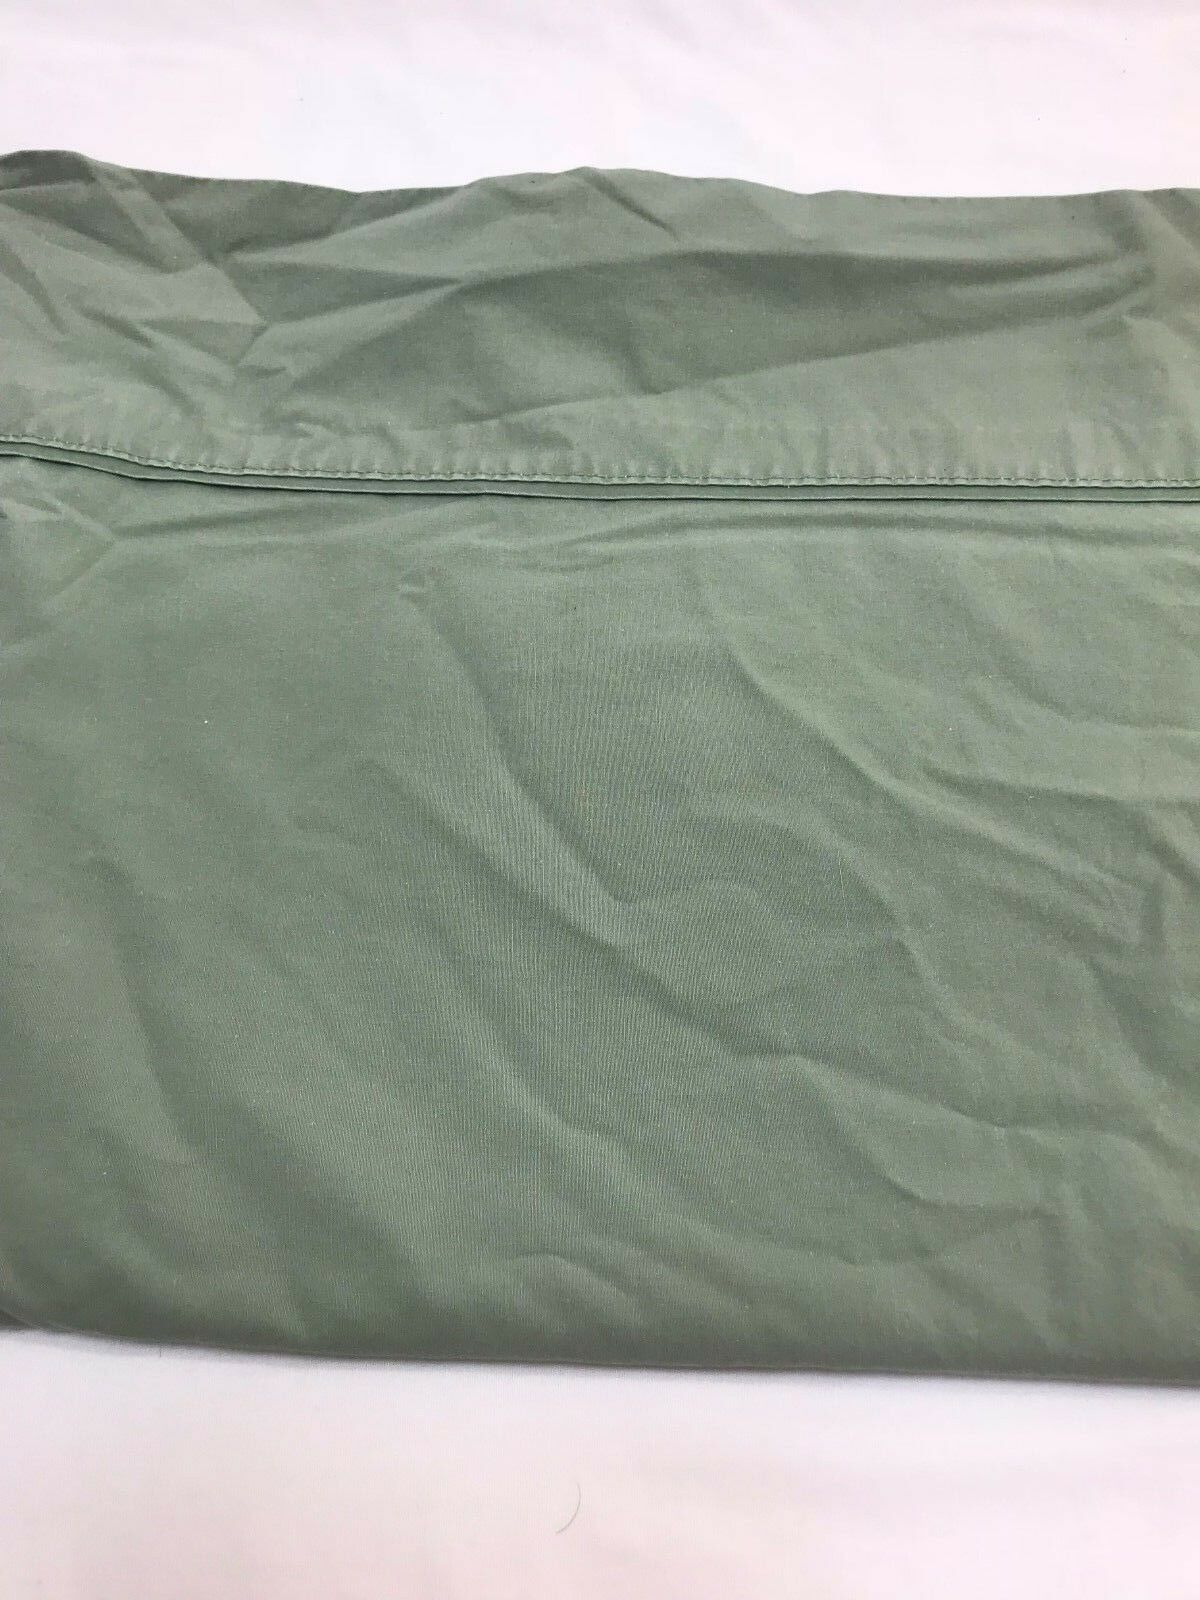 Ralph Lauren Solid Sage Green Cotton Percale King Flat Sheet - Sheets ...